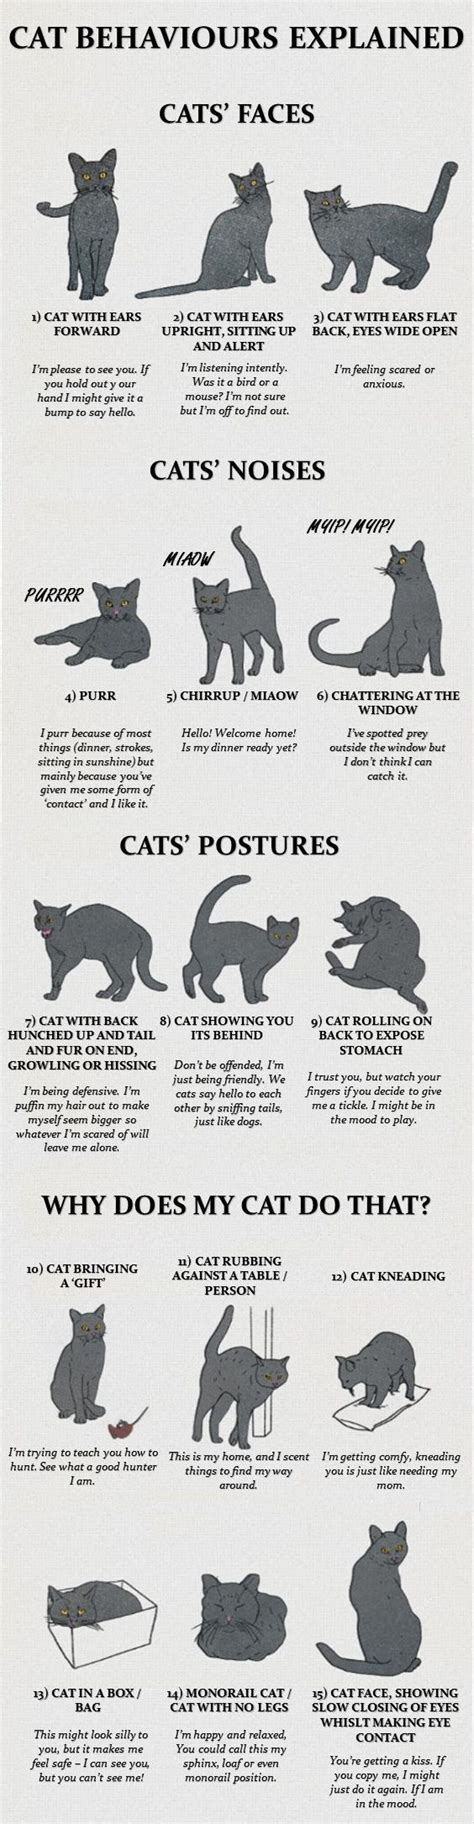 Common Cat Behaviors